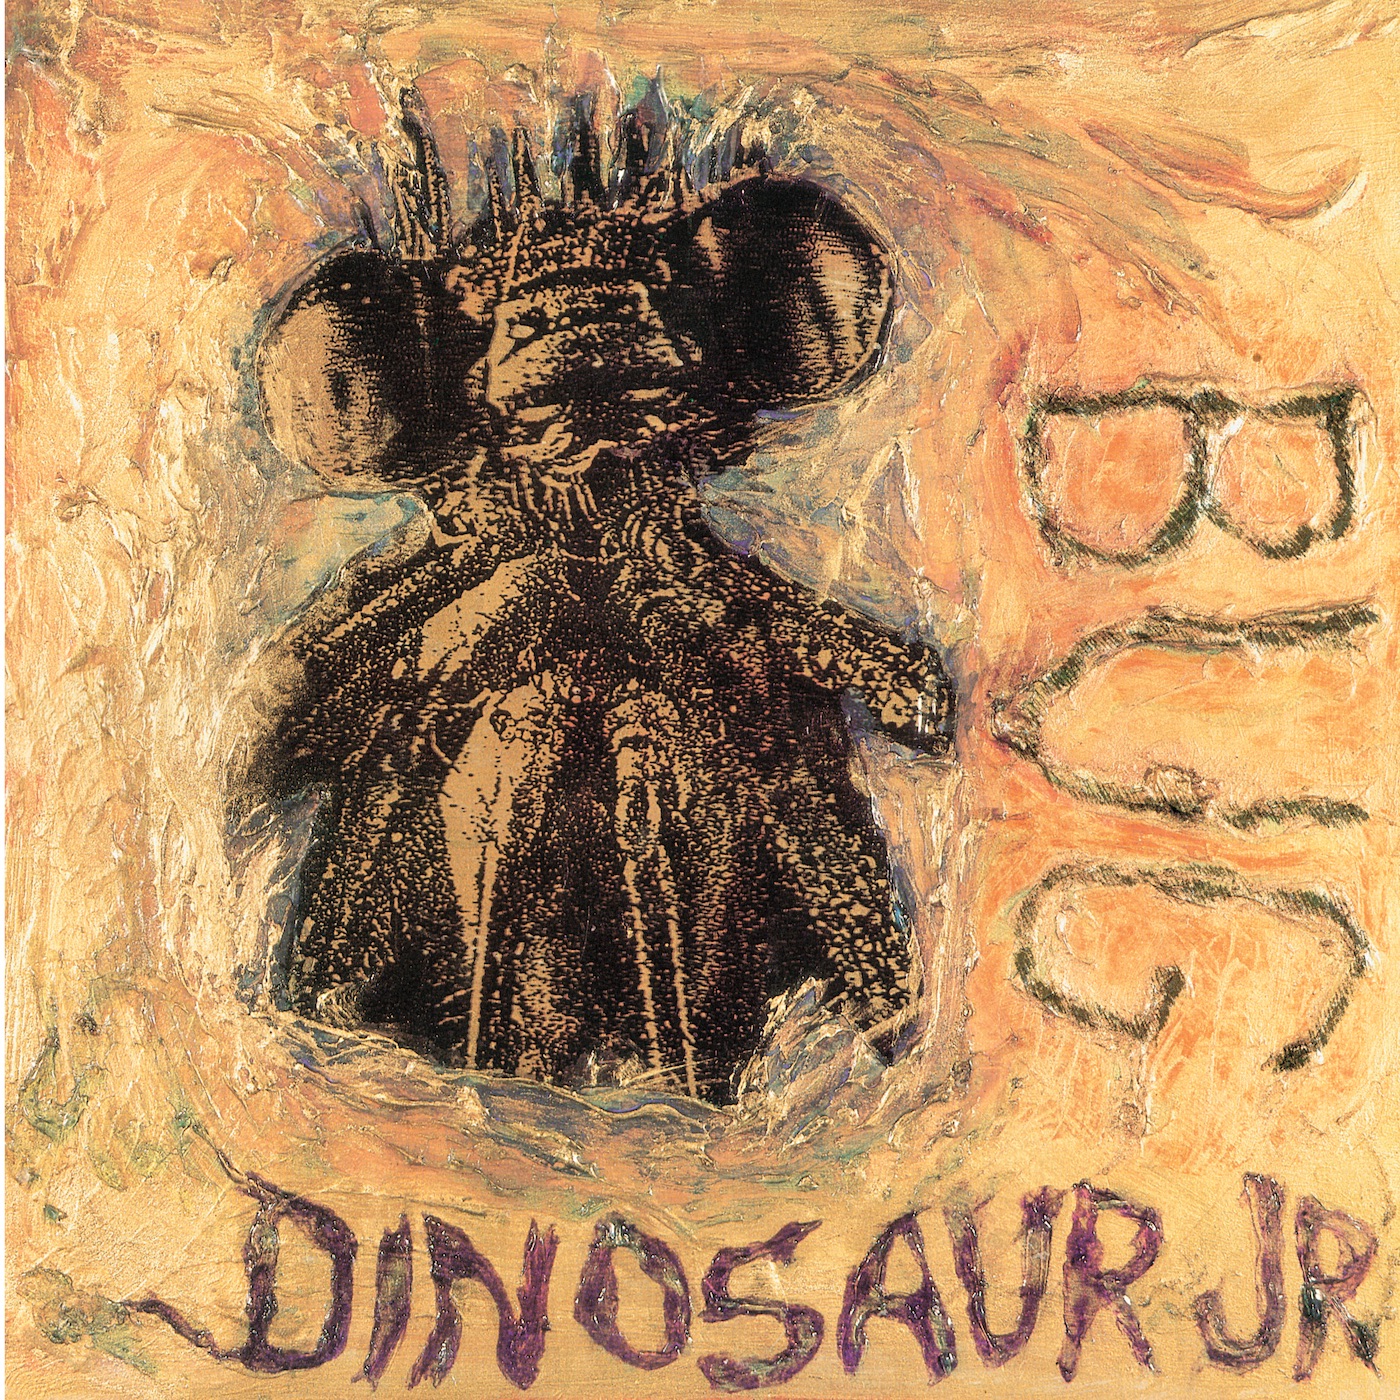 Bug by Dinosaur Jr.